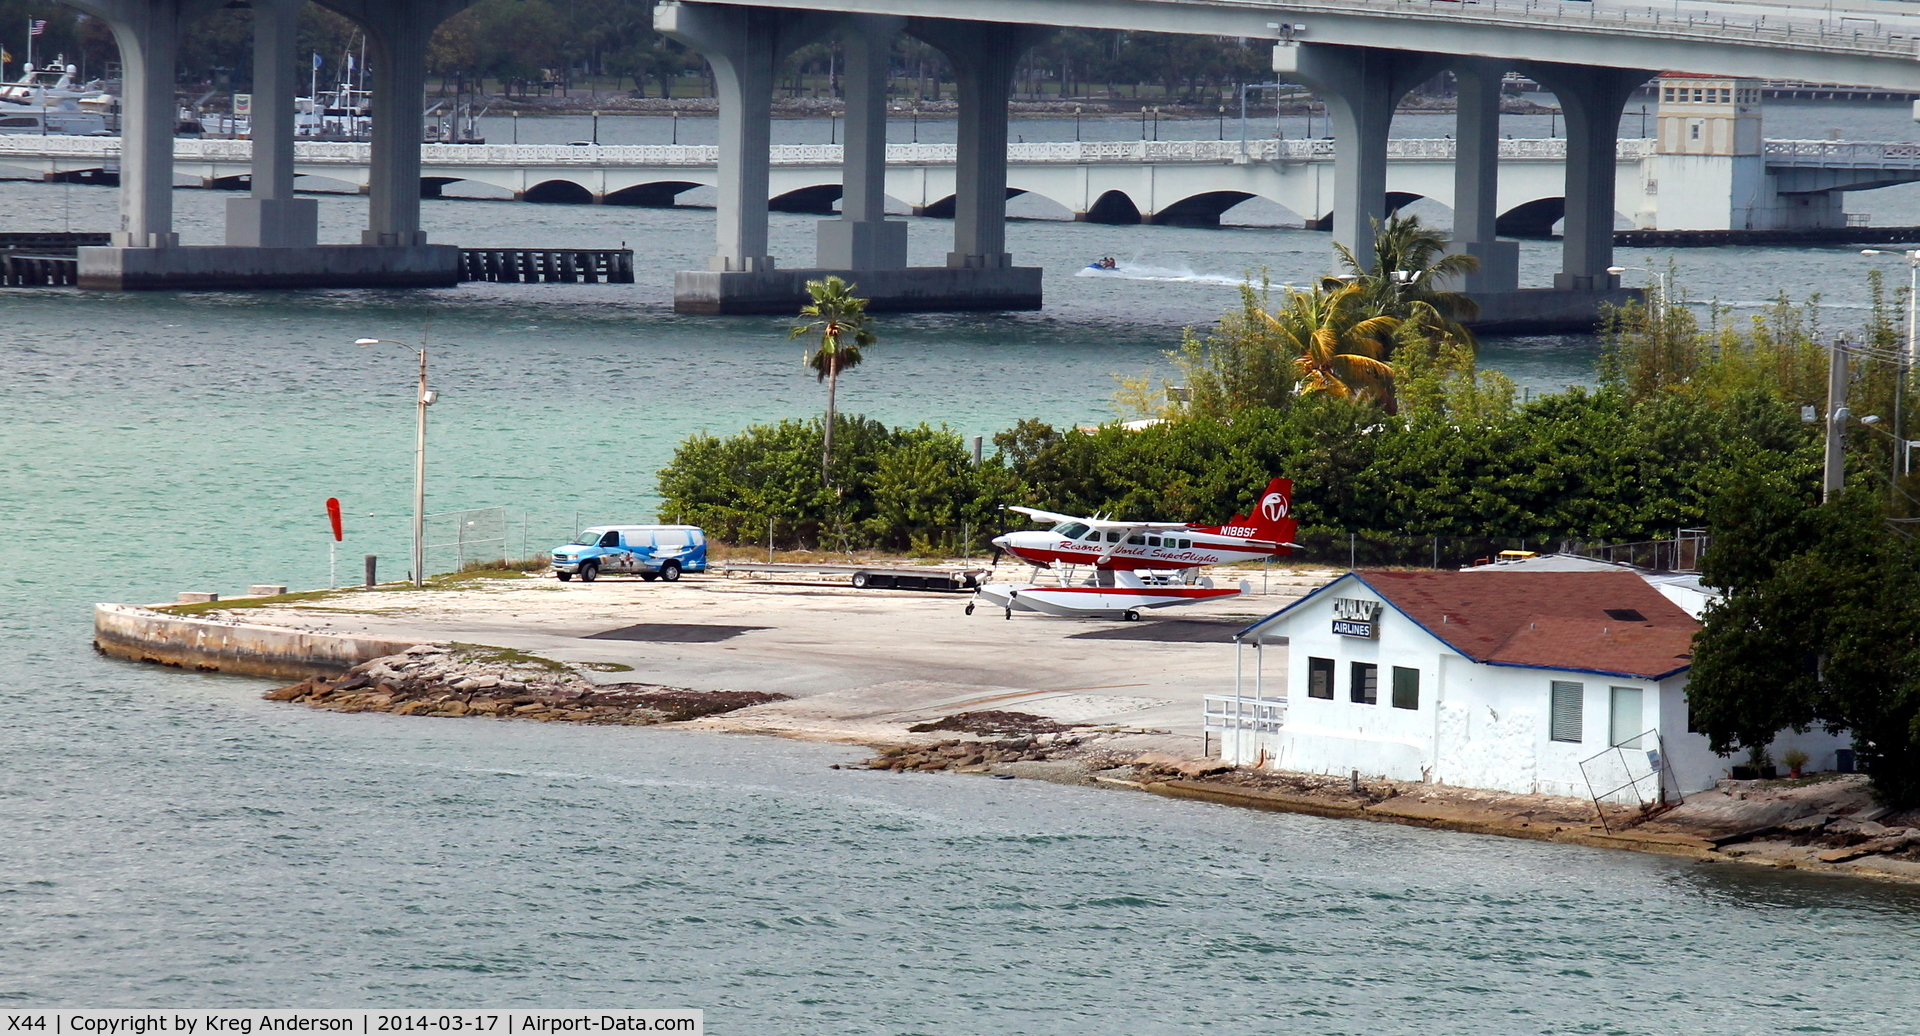 Miami Seaplane Base (X44) - A view of the famed Miami Seaplane Base in Miami, FL from the view on the Carnival Ecstasy.